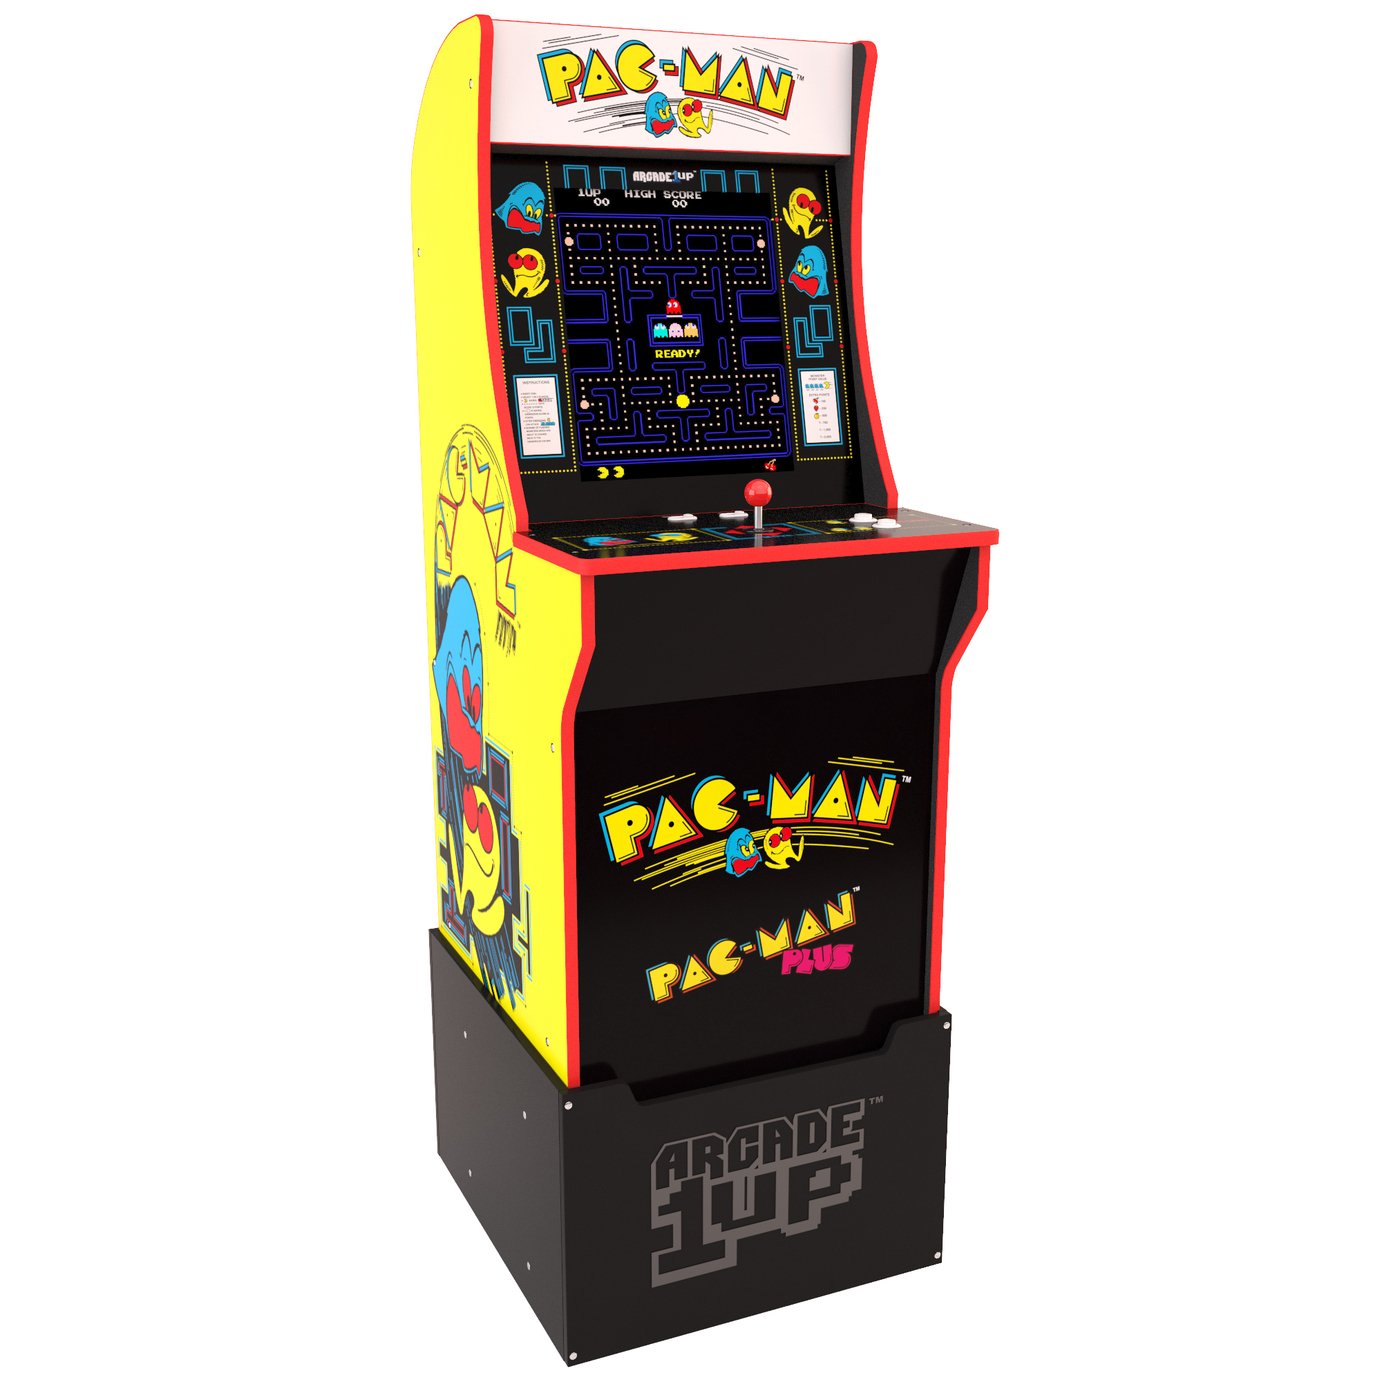 Arcade 1 Up PacMan Riser Review